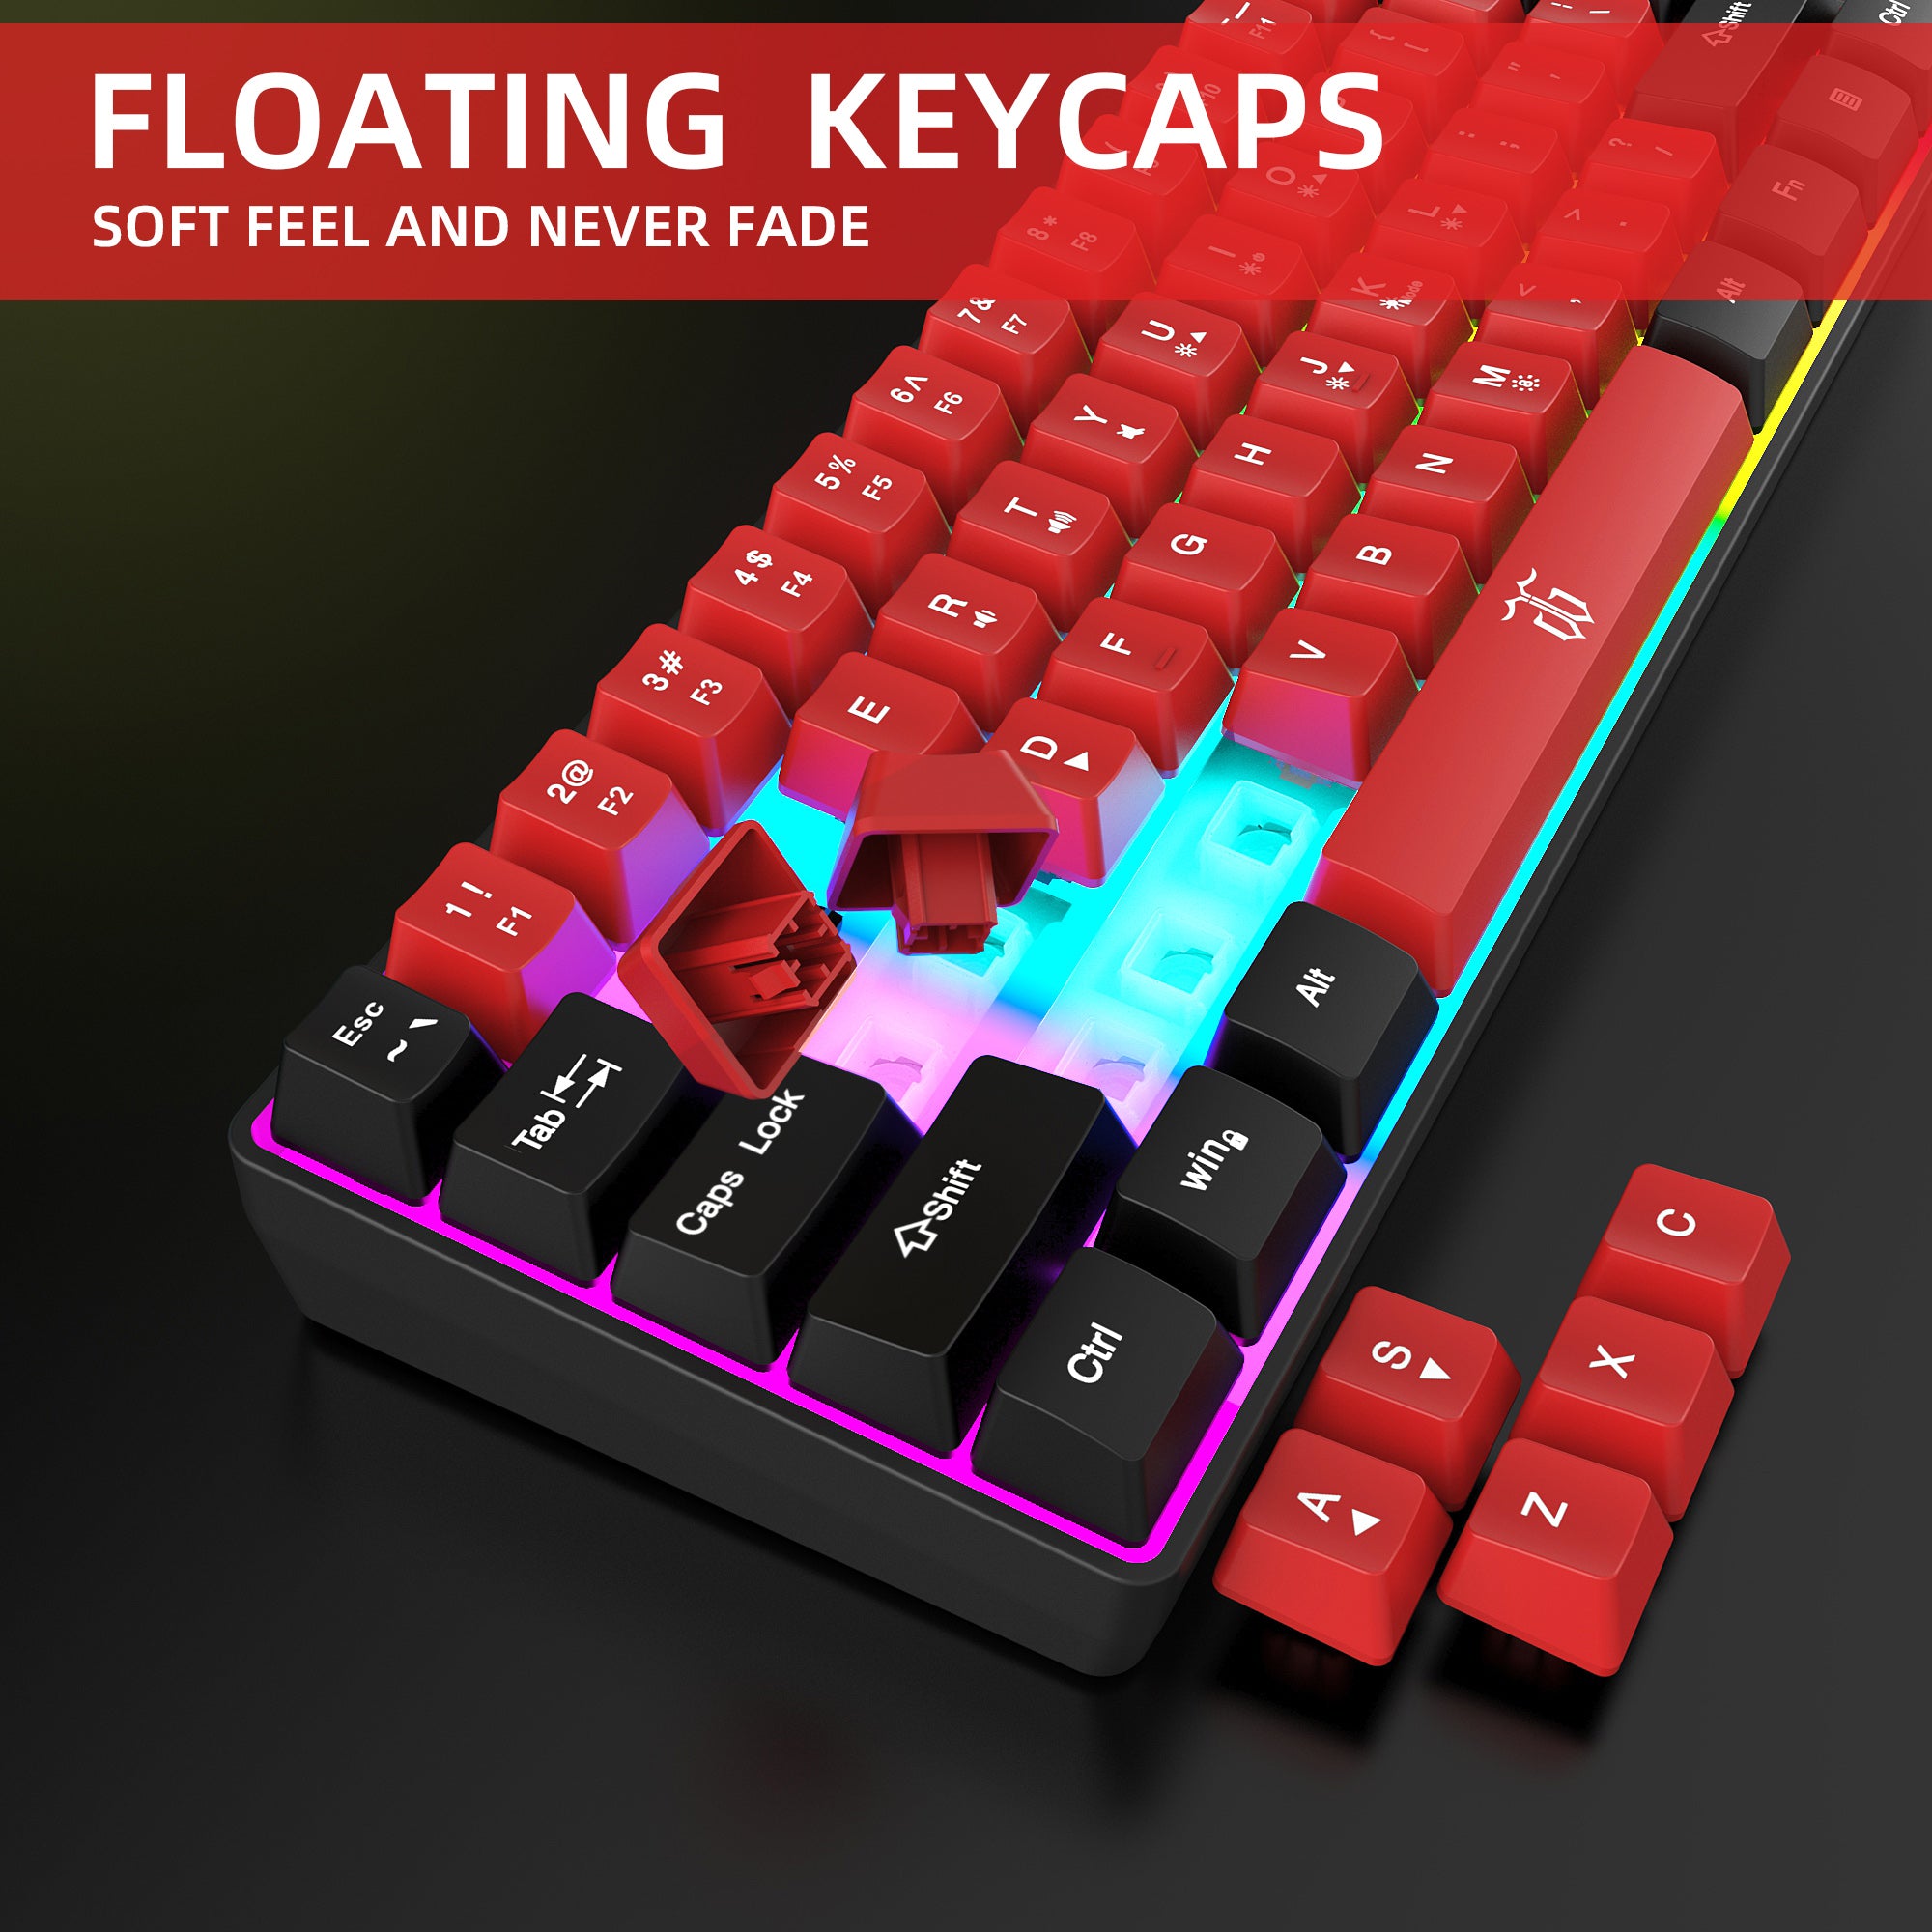 Snpurdiri 60% Membrane Wired Gaming Keyboard, Black-Red